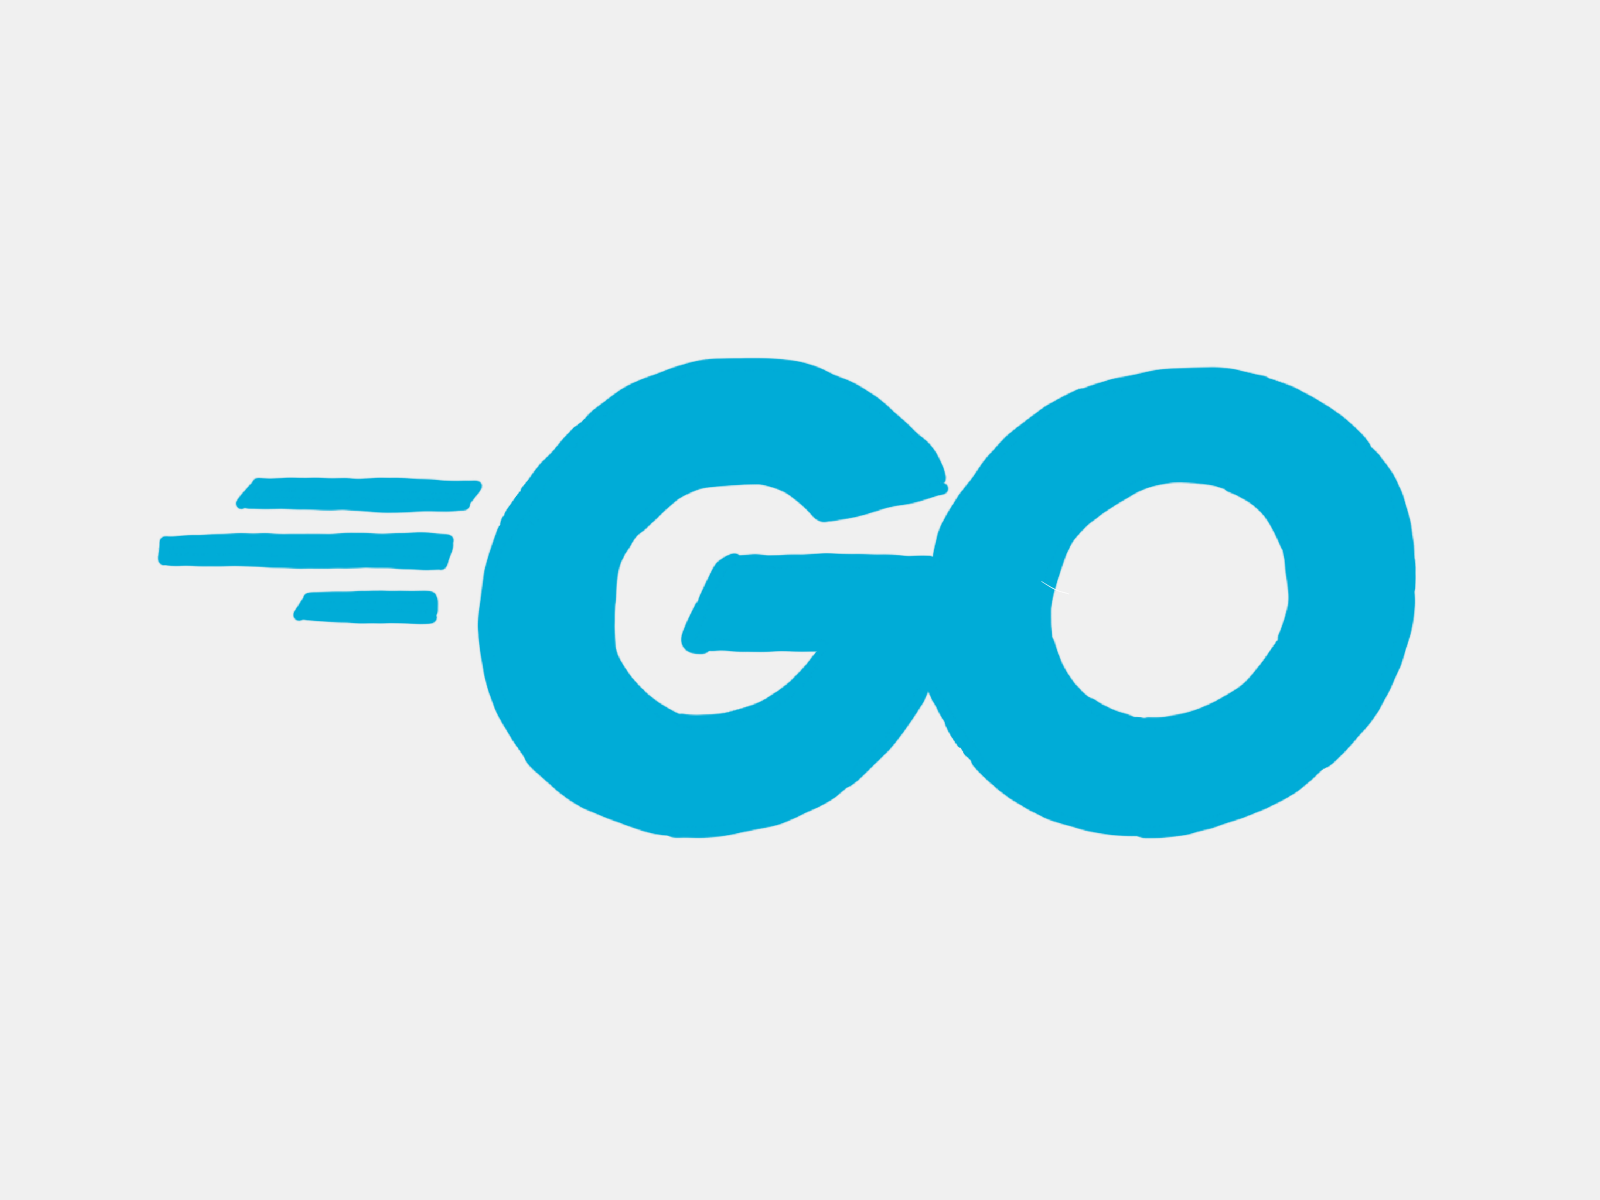 An illustration of the Go logo.